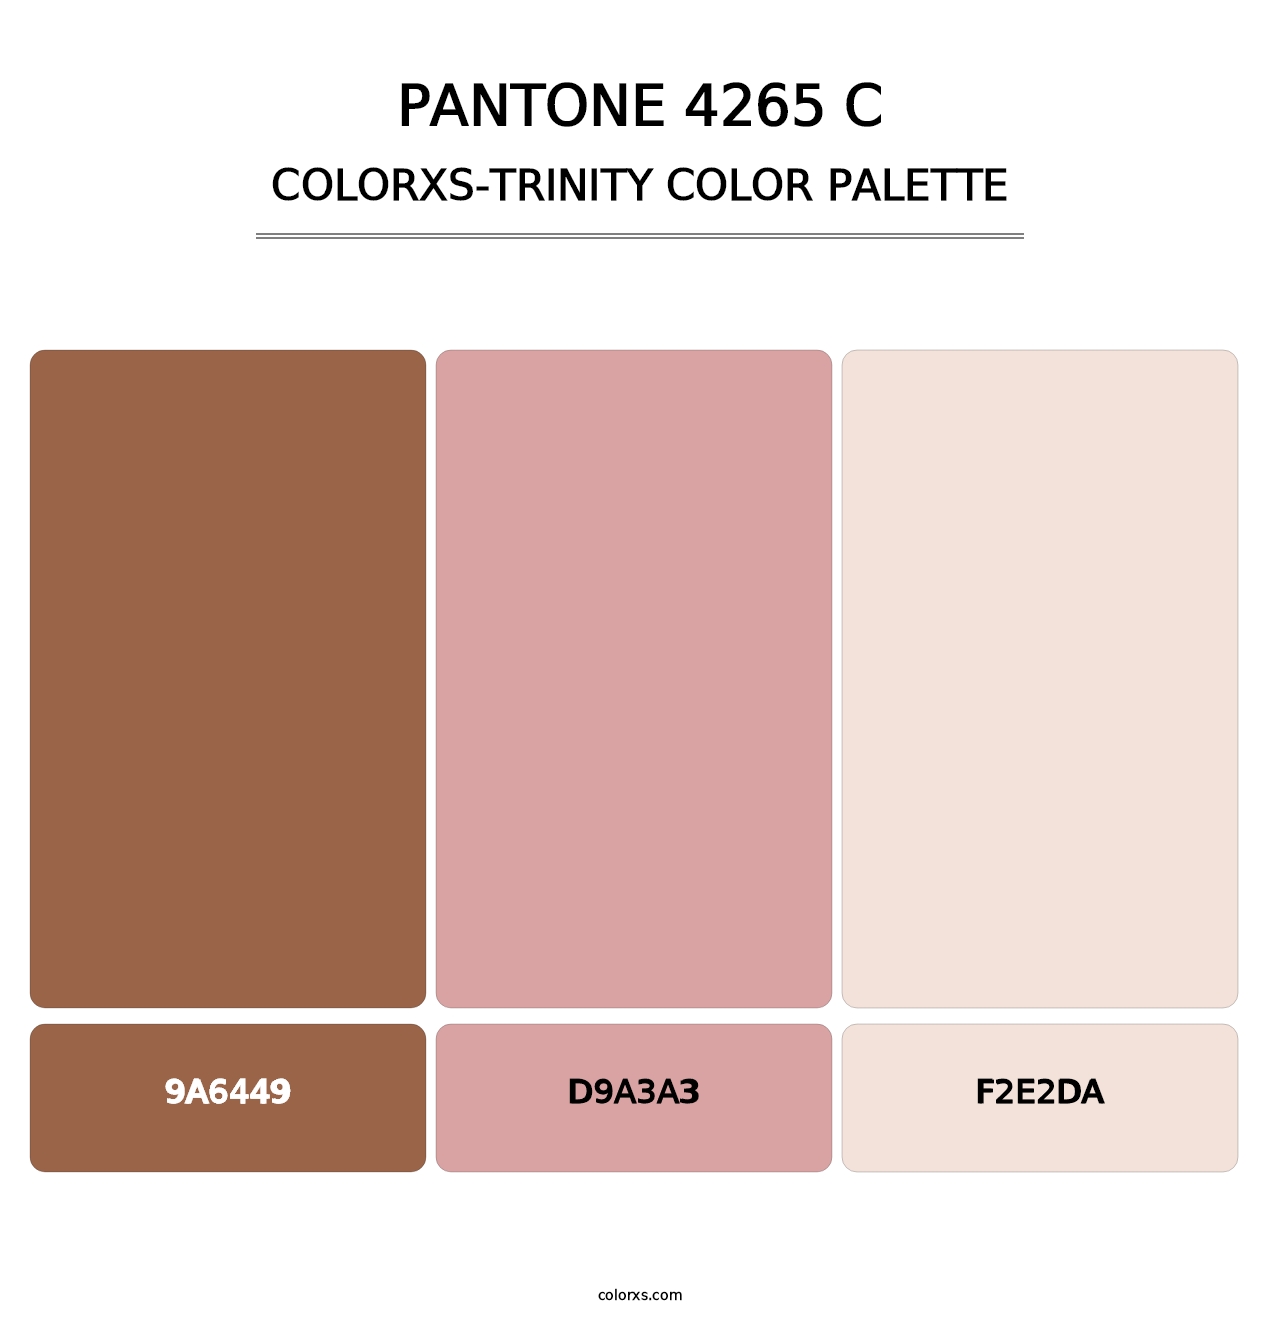 PANTONE 4265 C - Colorxs Trinity Palette